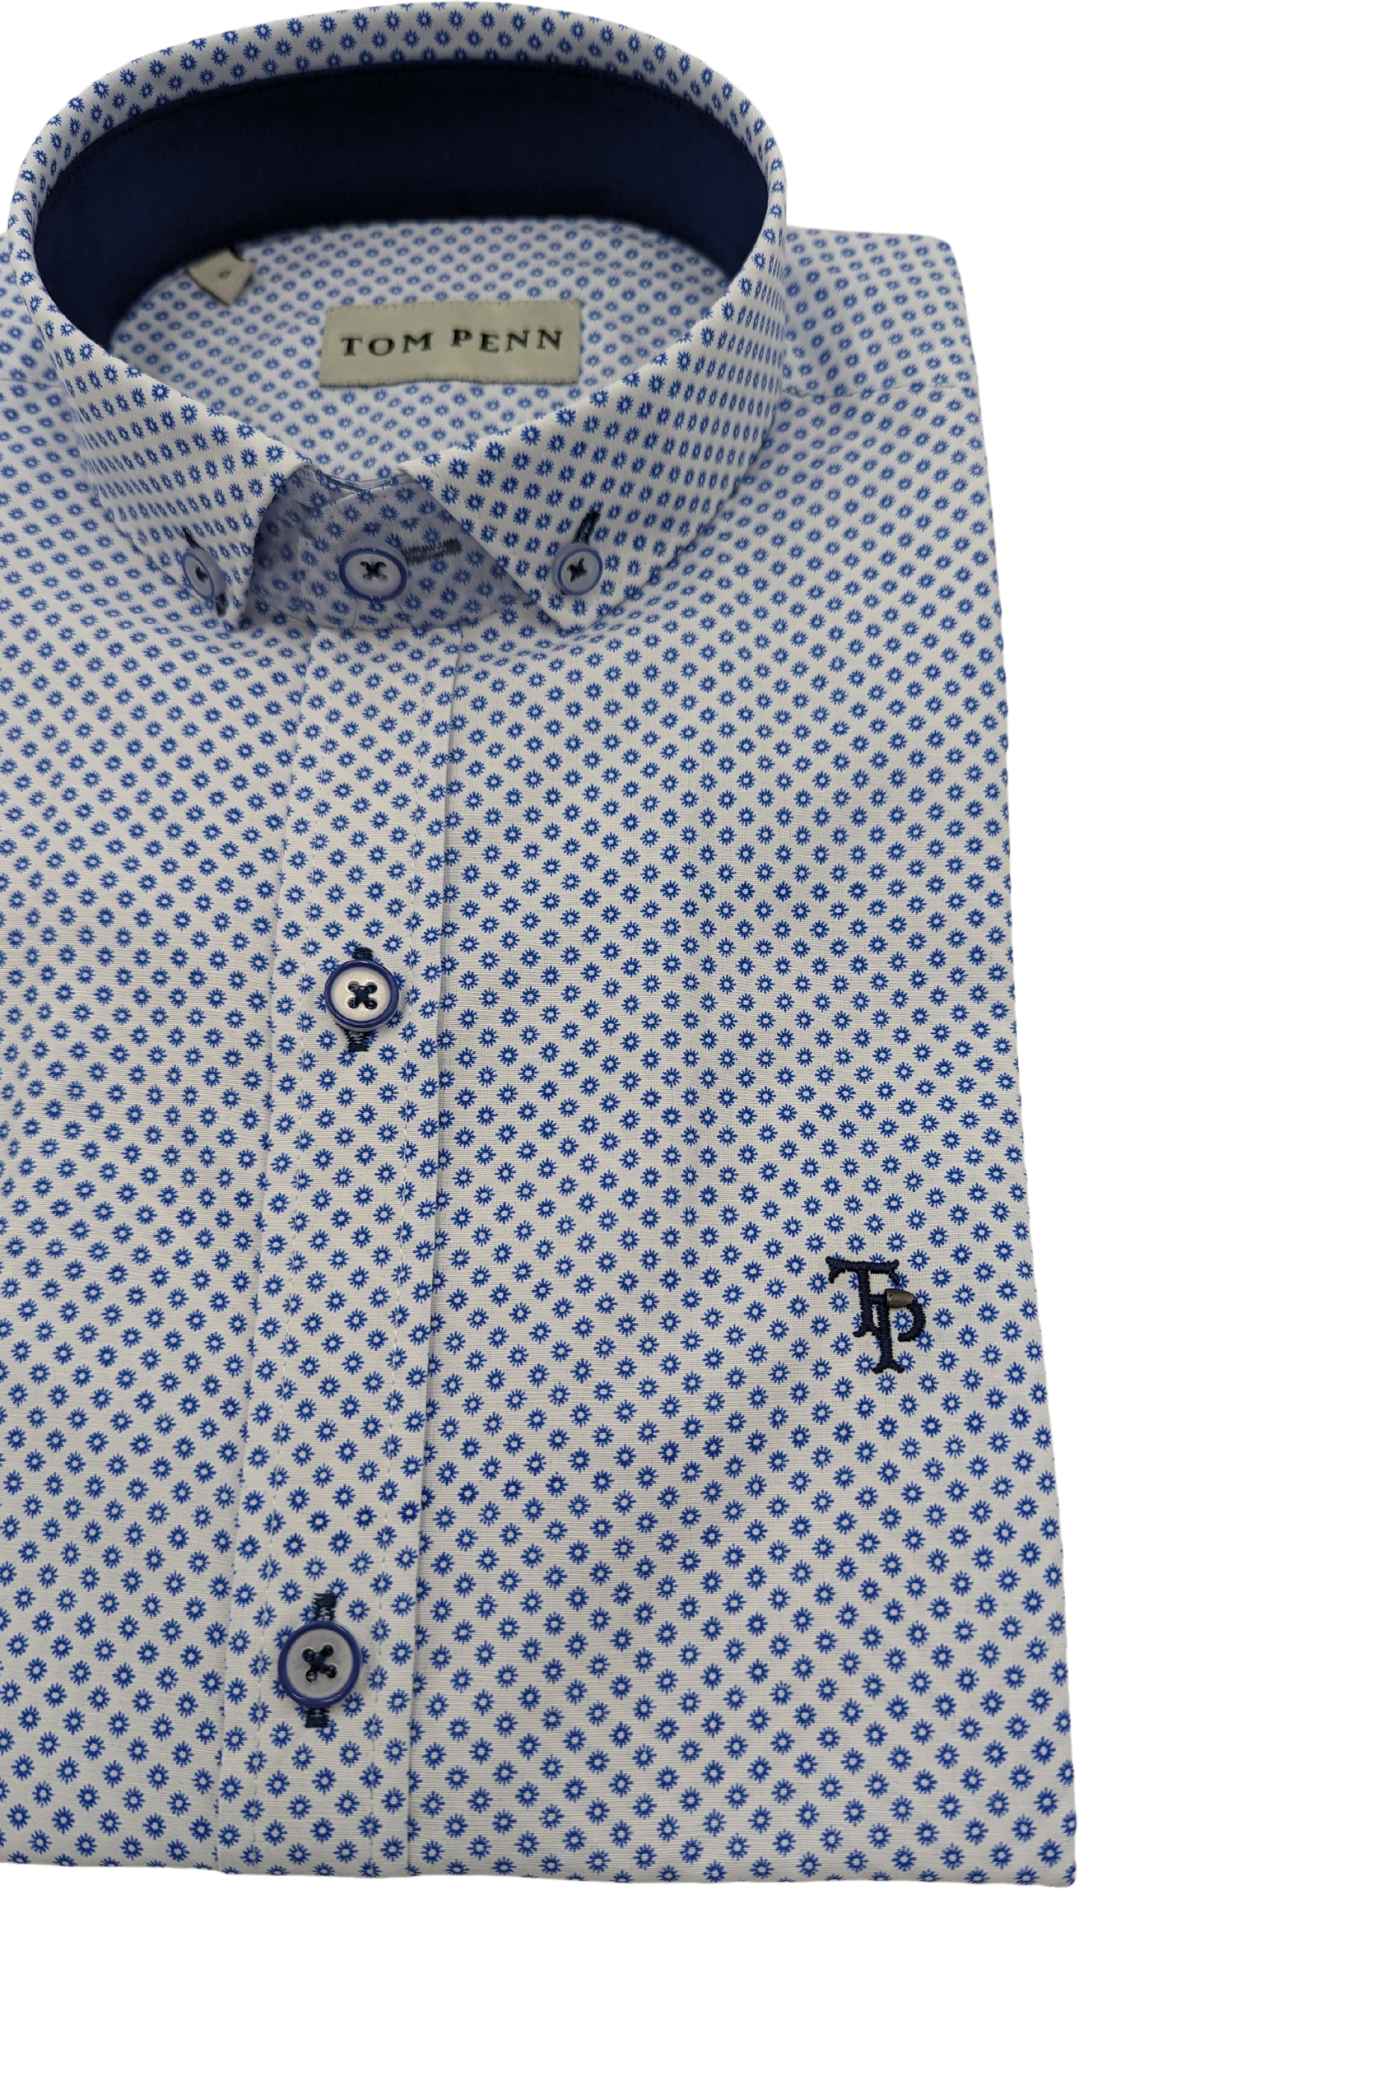 Short Sleeve White/Blue Shirt-Detail view